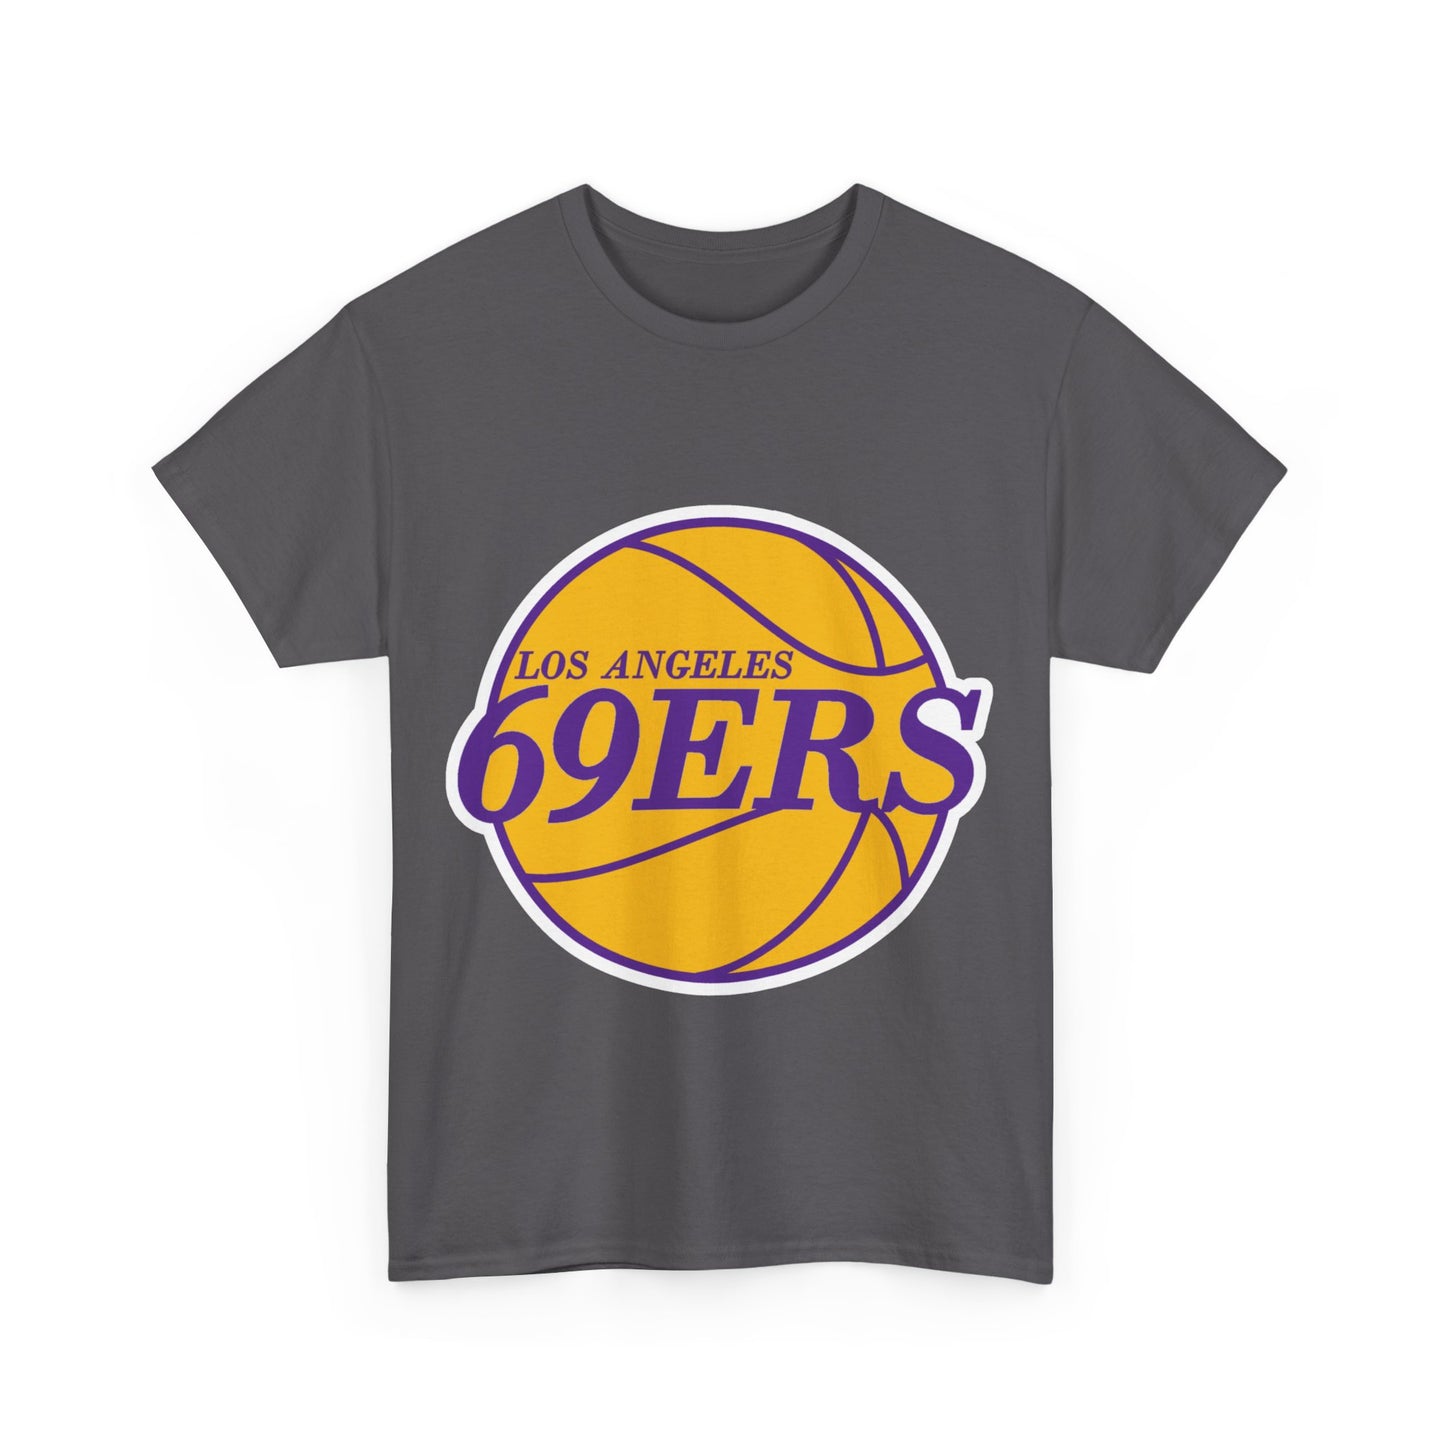 Los Angeles 69ers Unisex Cotton T-Shirt (Los Angeles Lakers Parody)